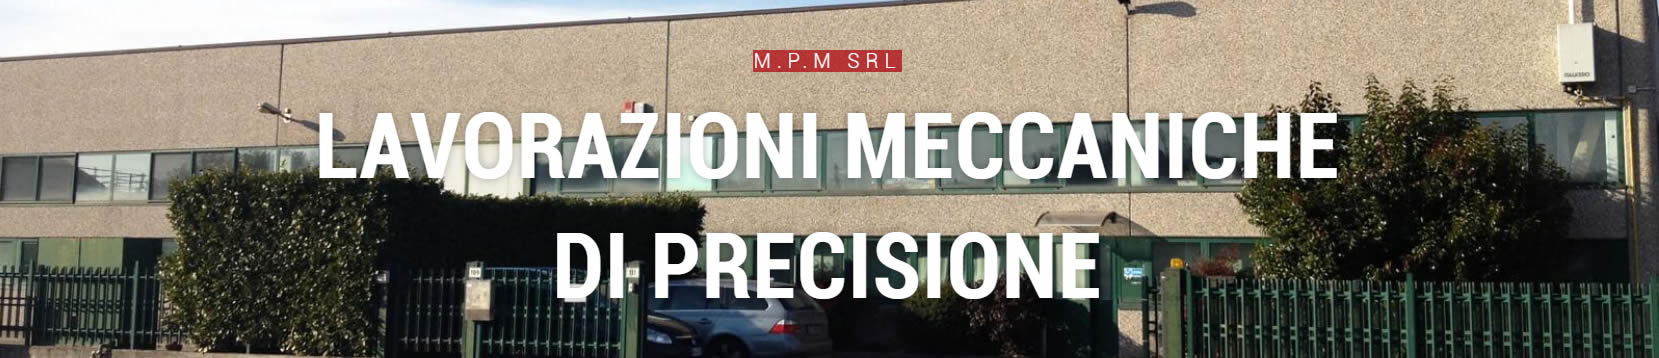 Officina meccanica di precisione Cairate MPM srl